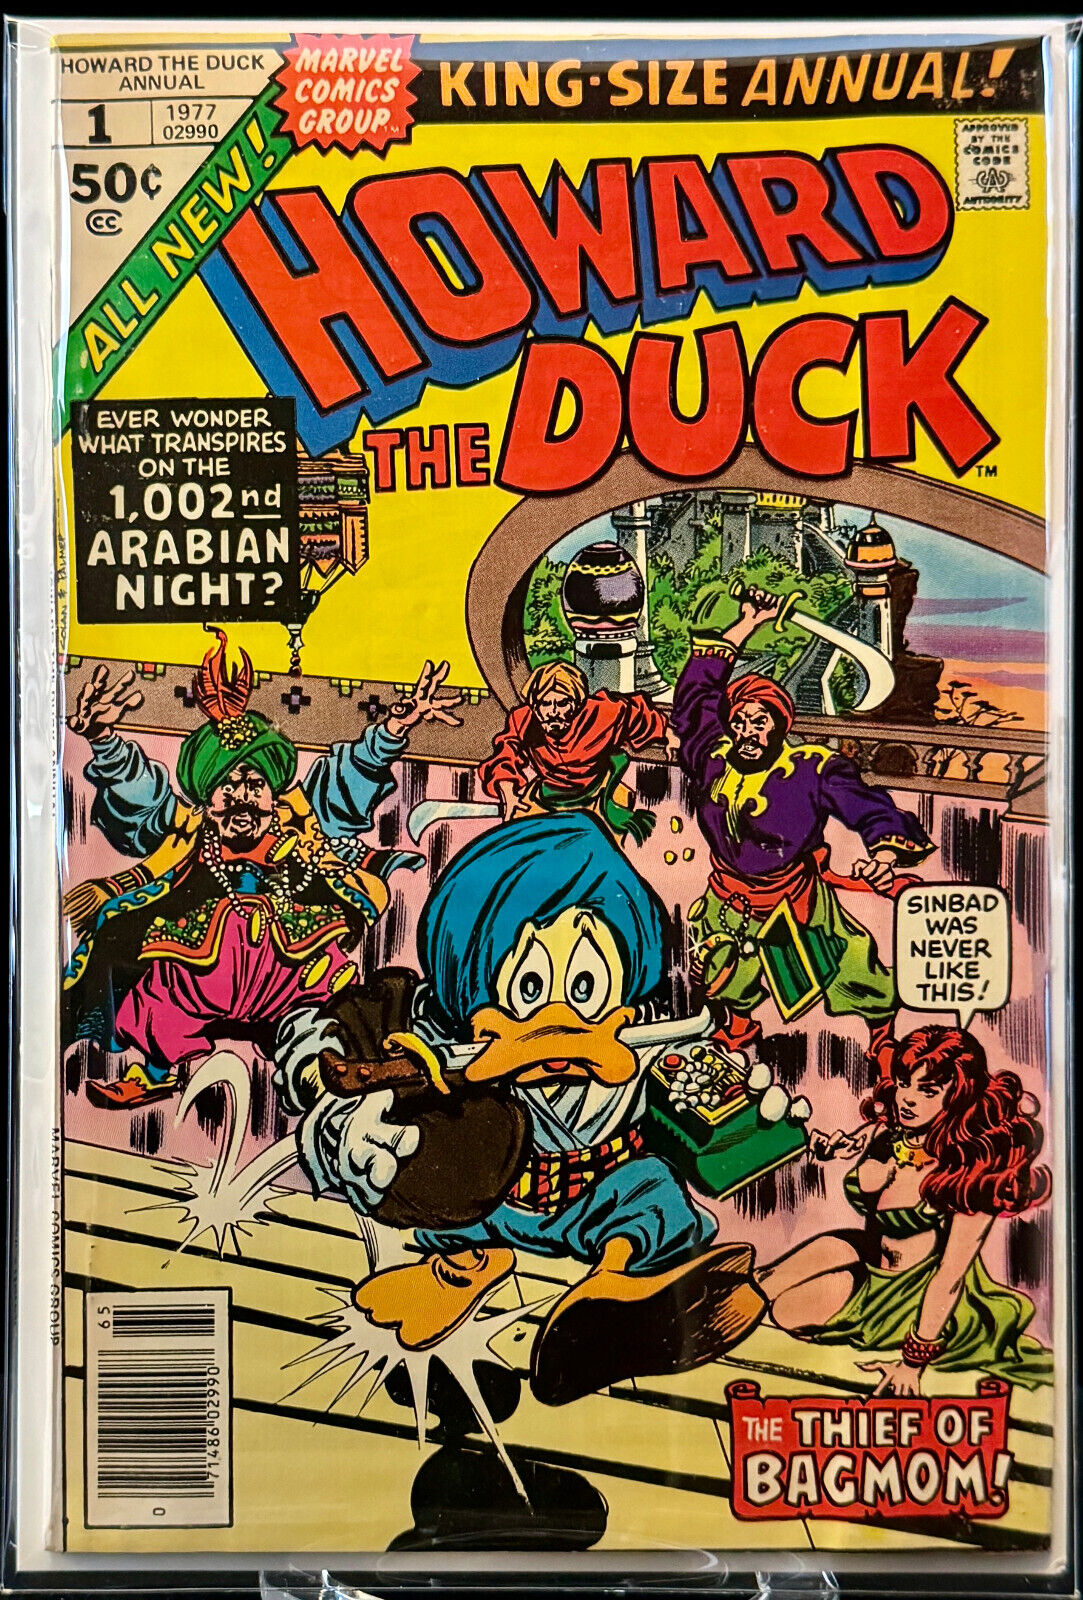 HOWARD THE DUCK ANNUAL 1 (1977) Marvel Comics HI GRADE NEWSSTAND